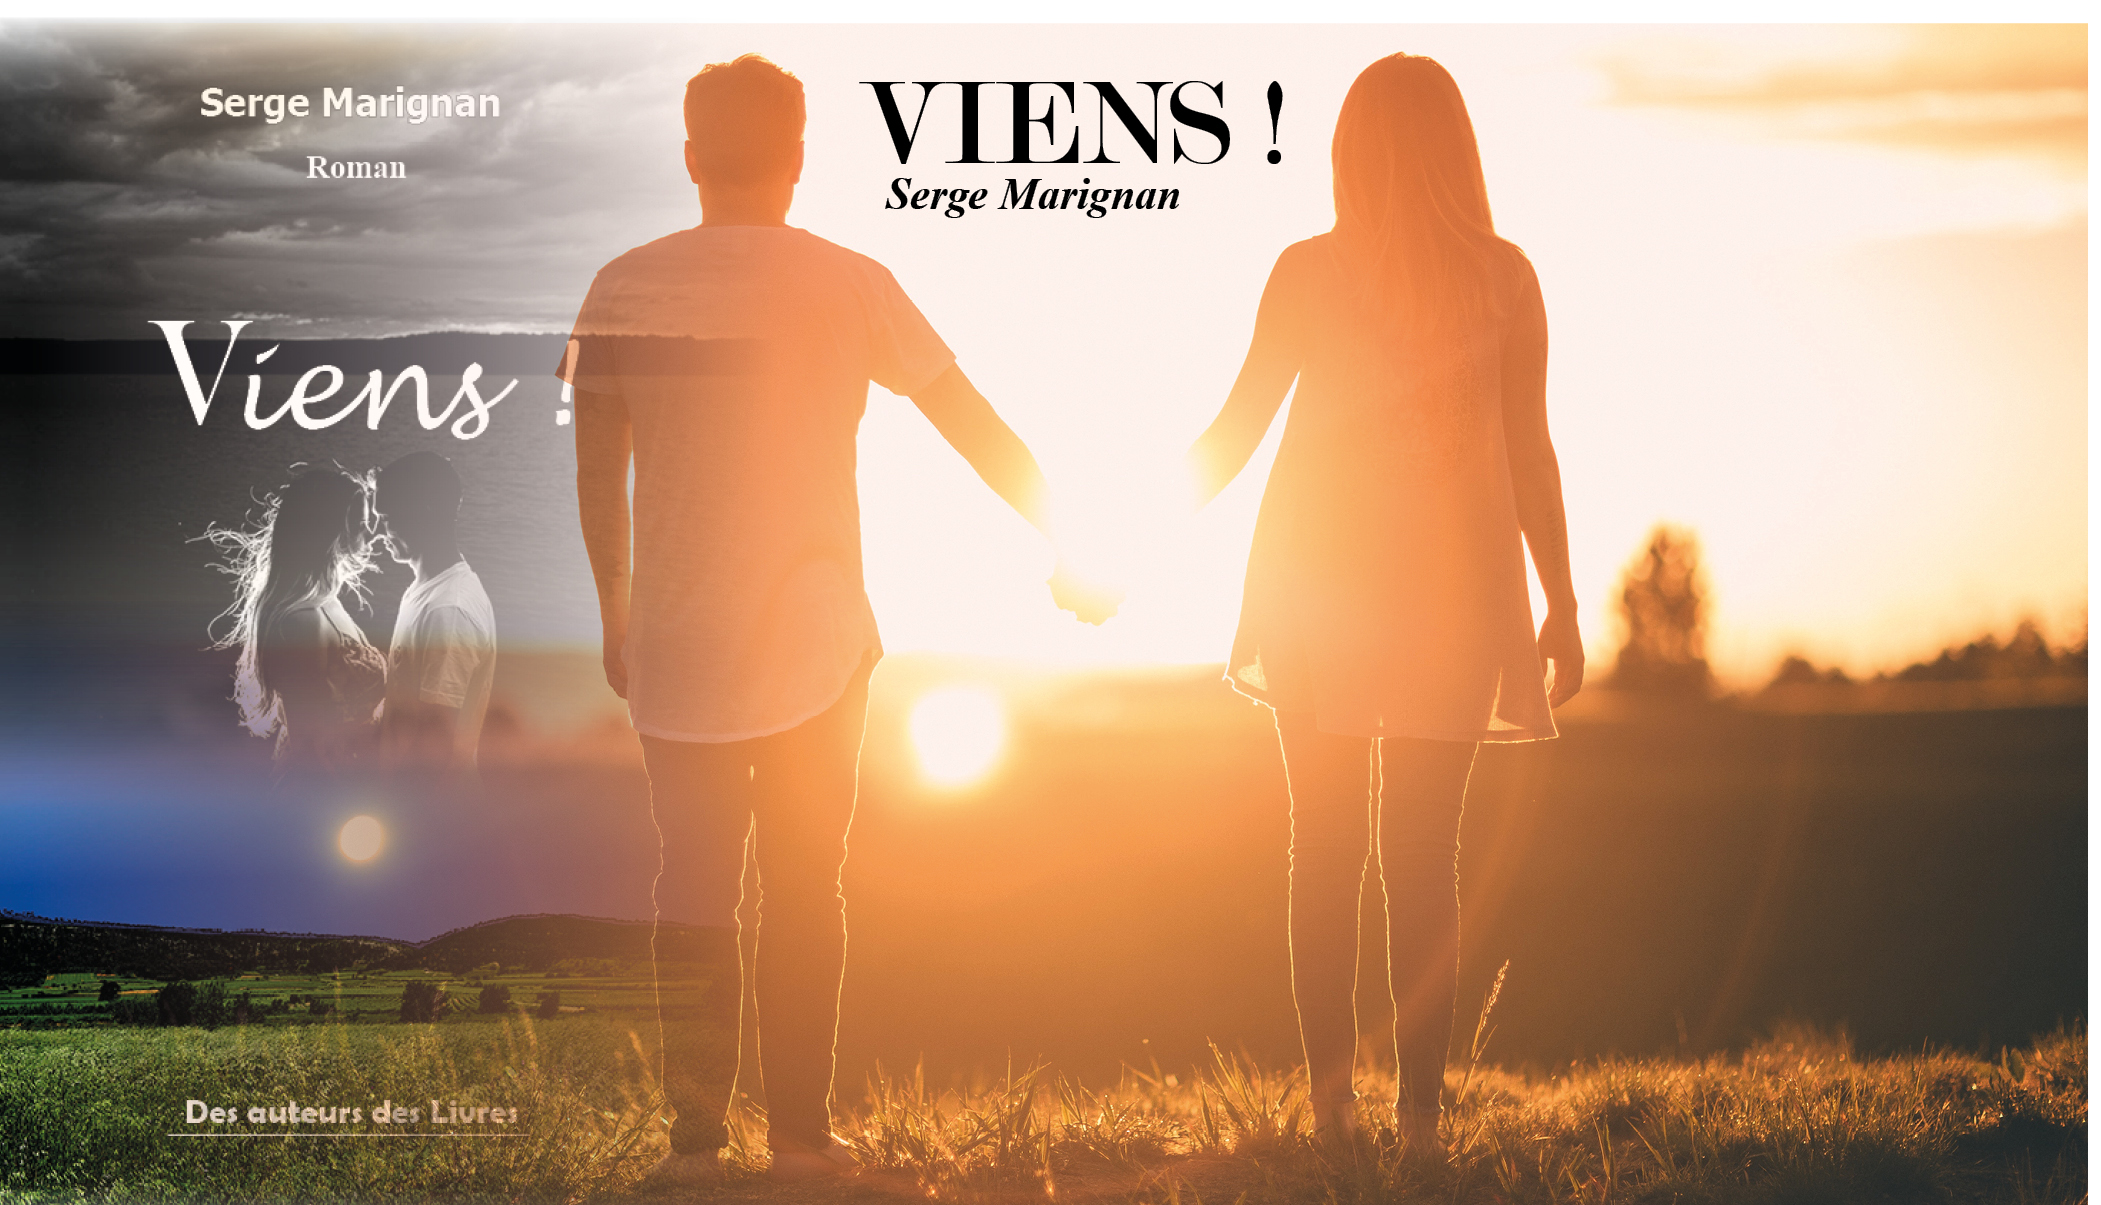 FOND JUST FOCUSVIENS Le premier roman de Serge Marignan s’intitule Viens !